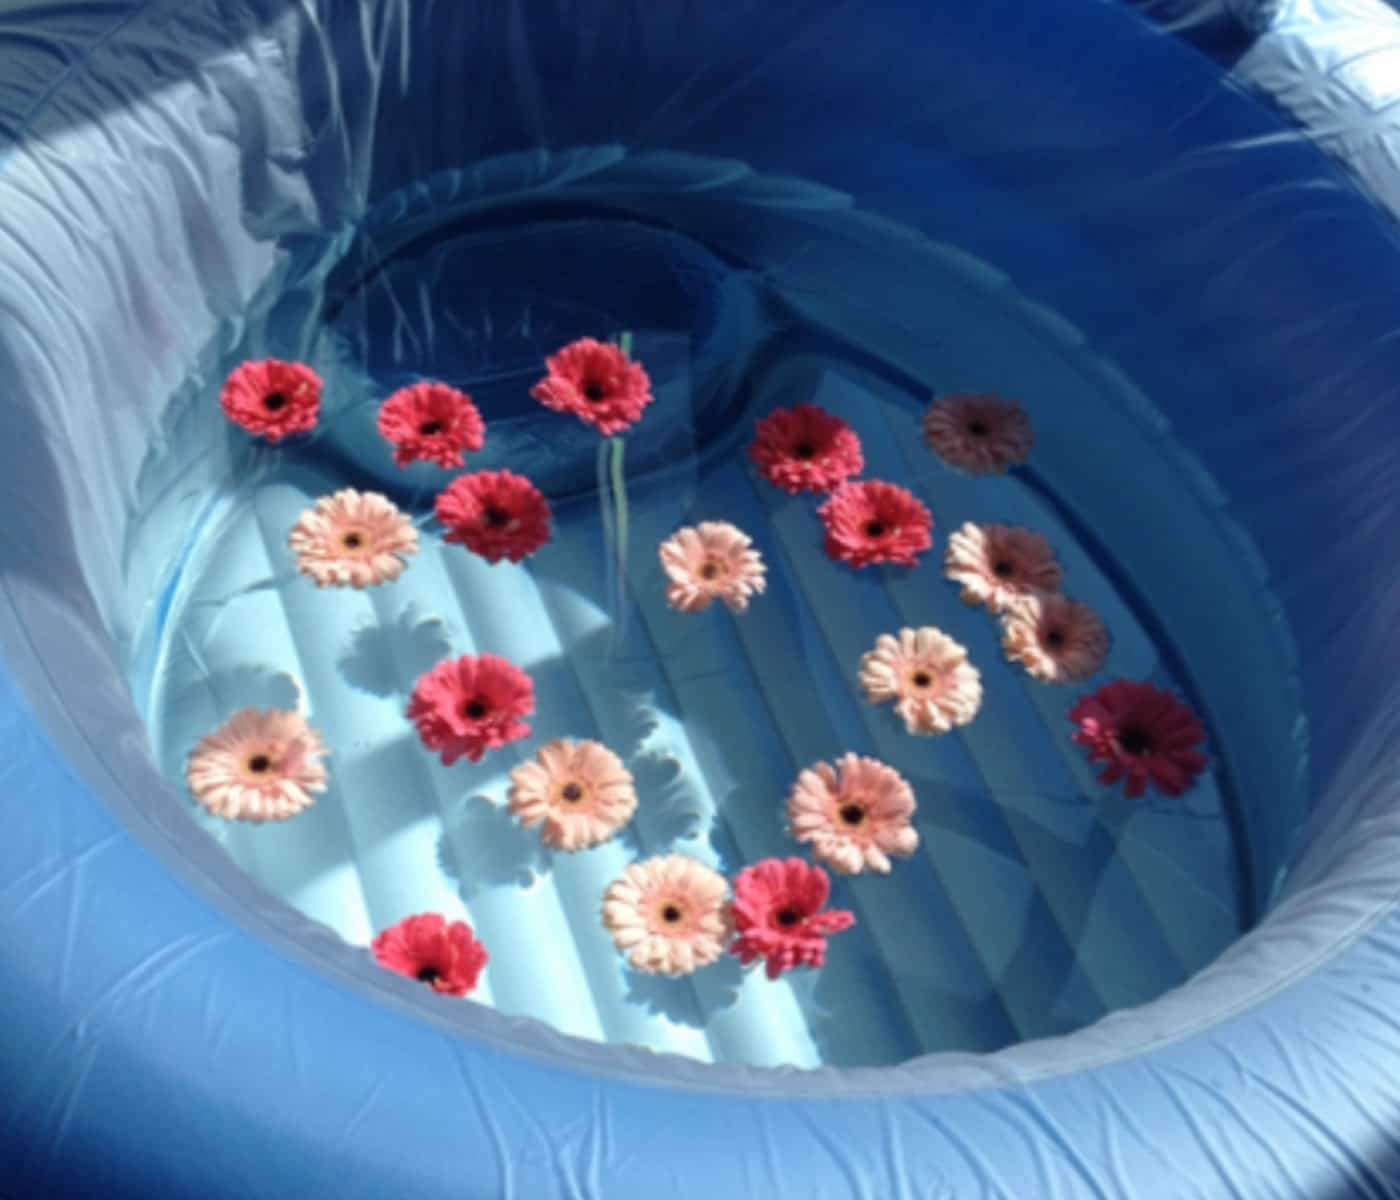 waterbirth pool